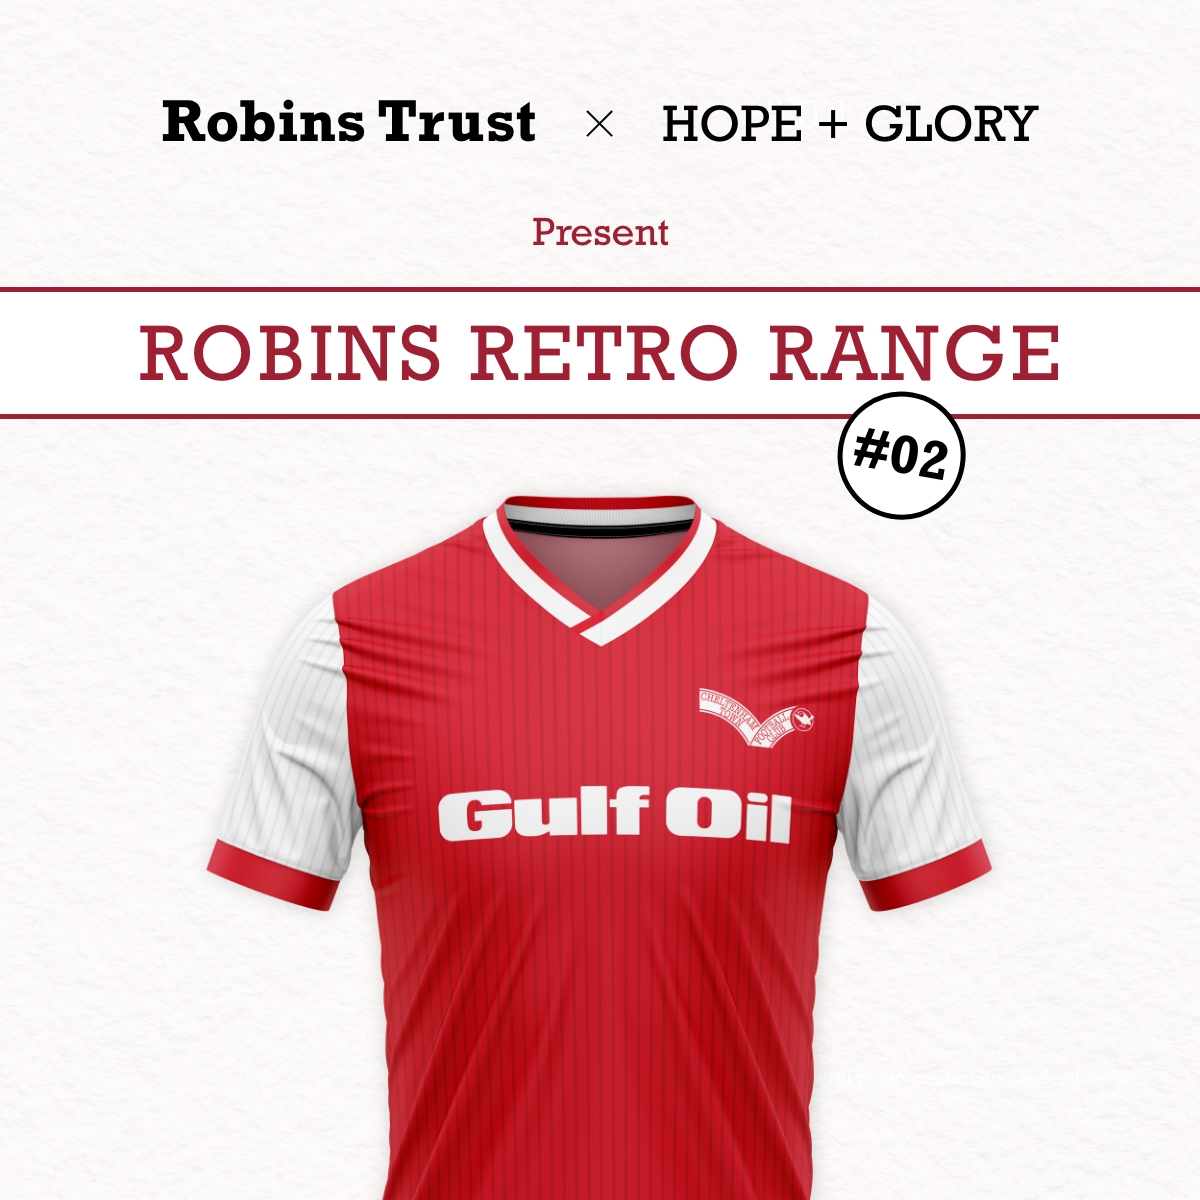 Robins Trust x Hope and Glory Present Robins Retro range #02